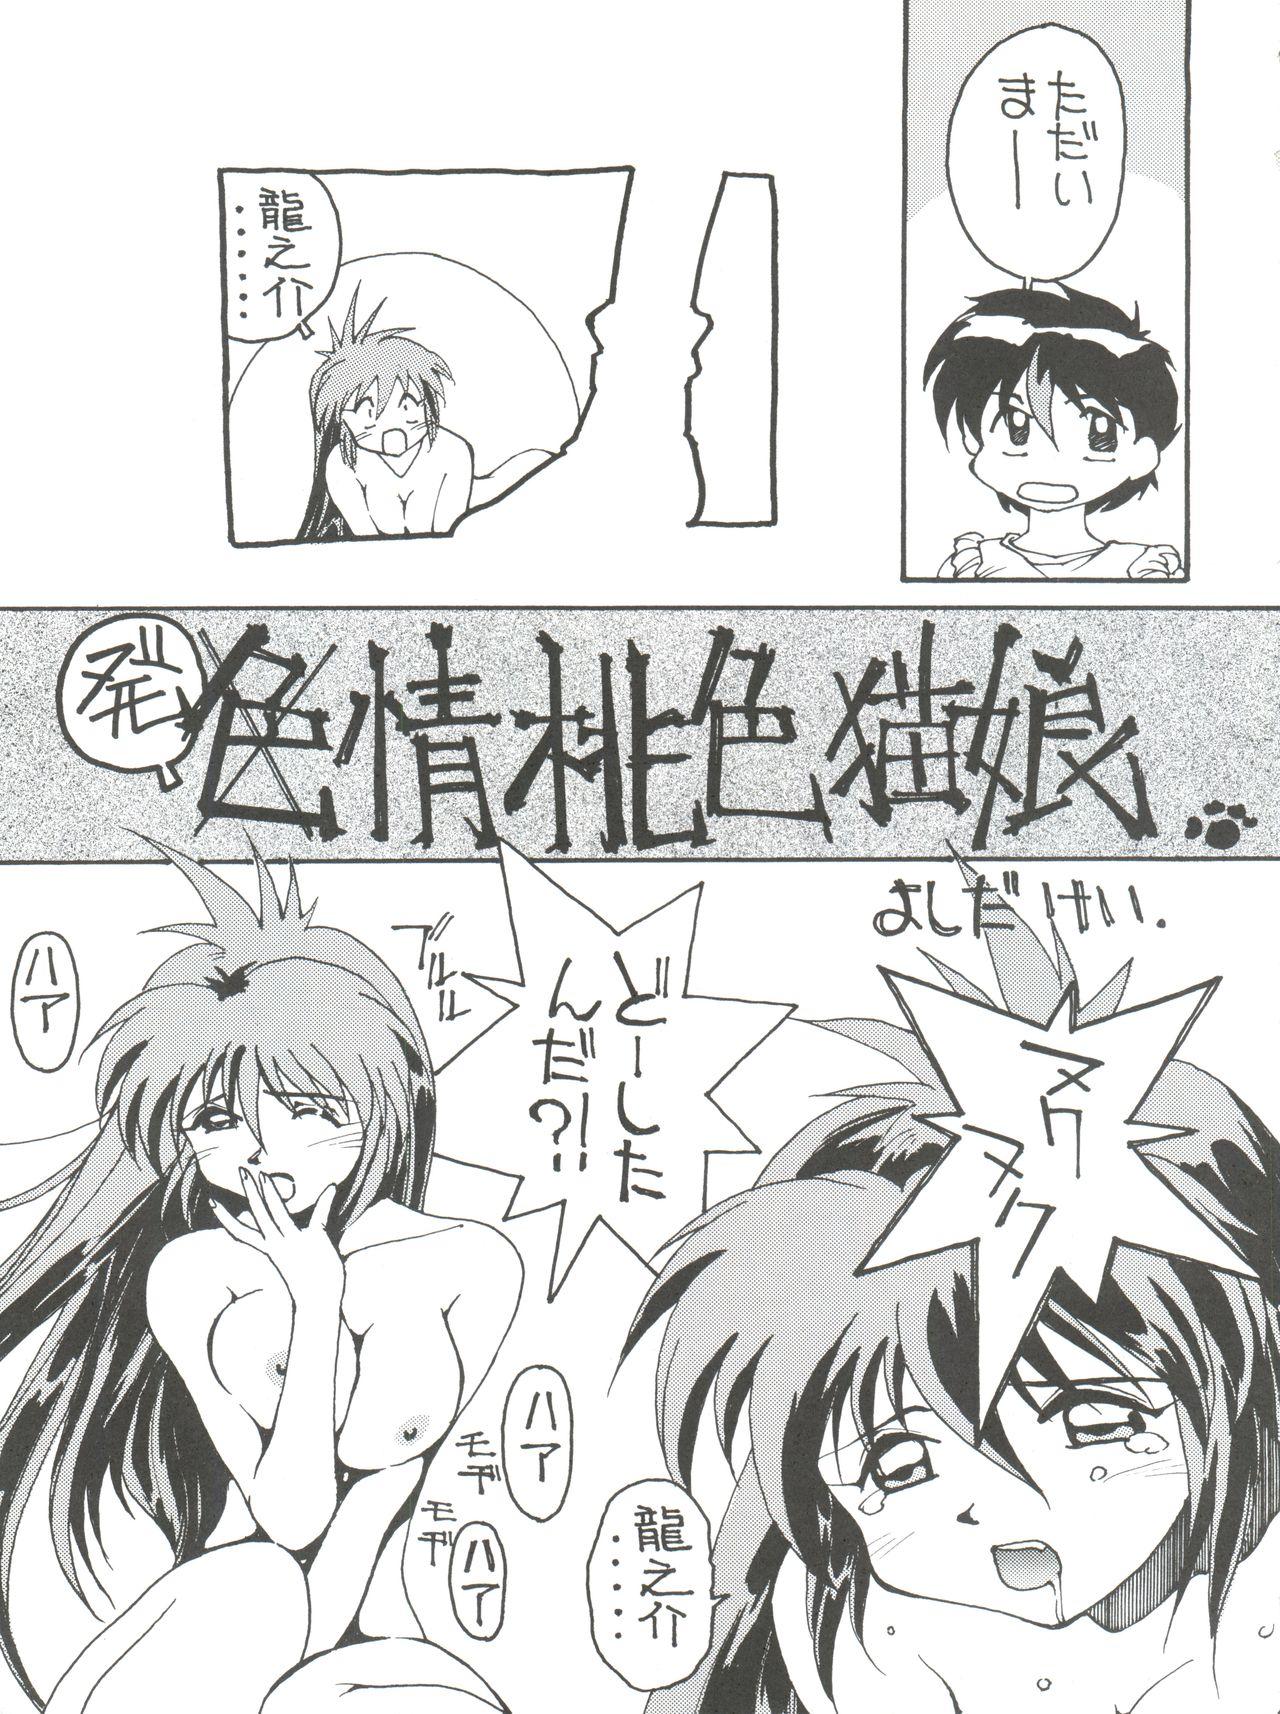 Pov Blowjob Toufuya Rokuchou - Sailor moon Tenchi muyo Ghost sweeper mikami All purpose cultural cat girl nuku nuku All Natural - Page 9